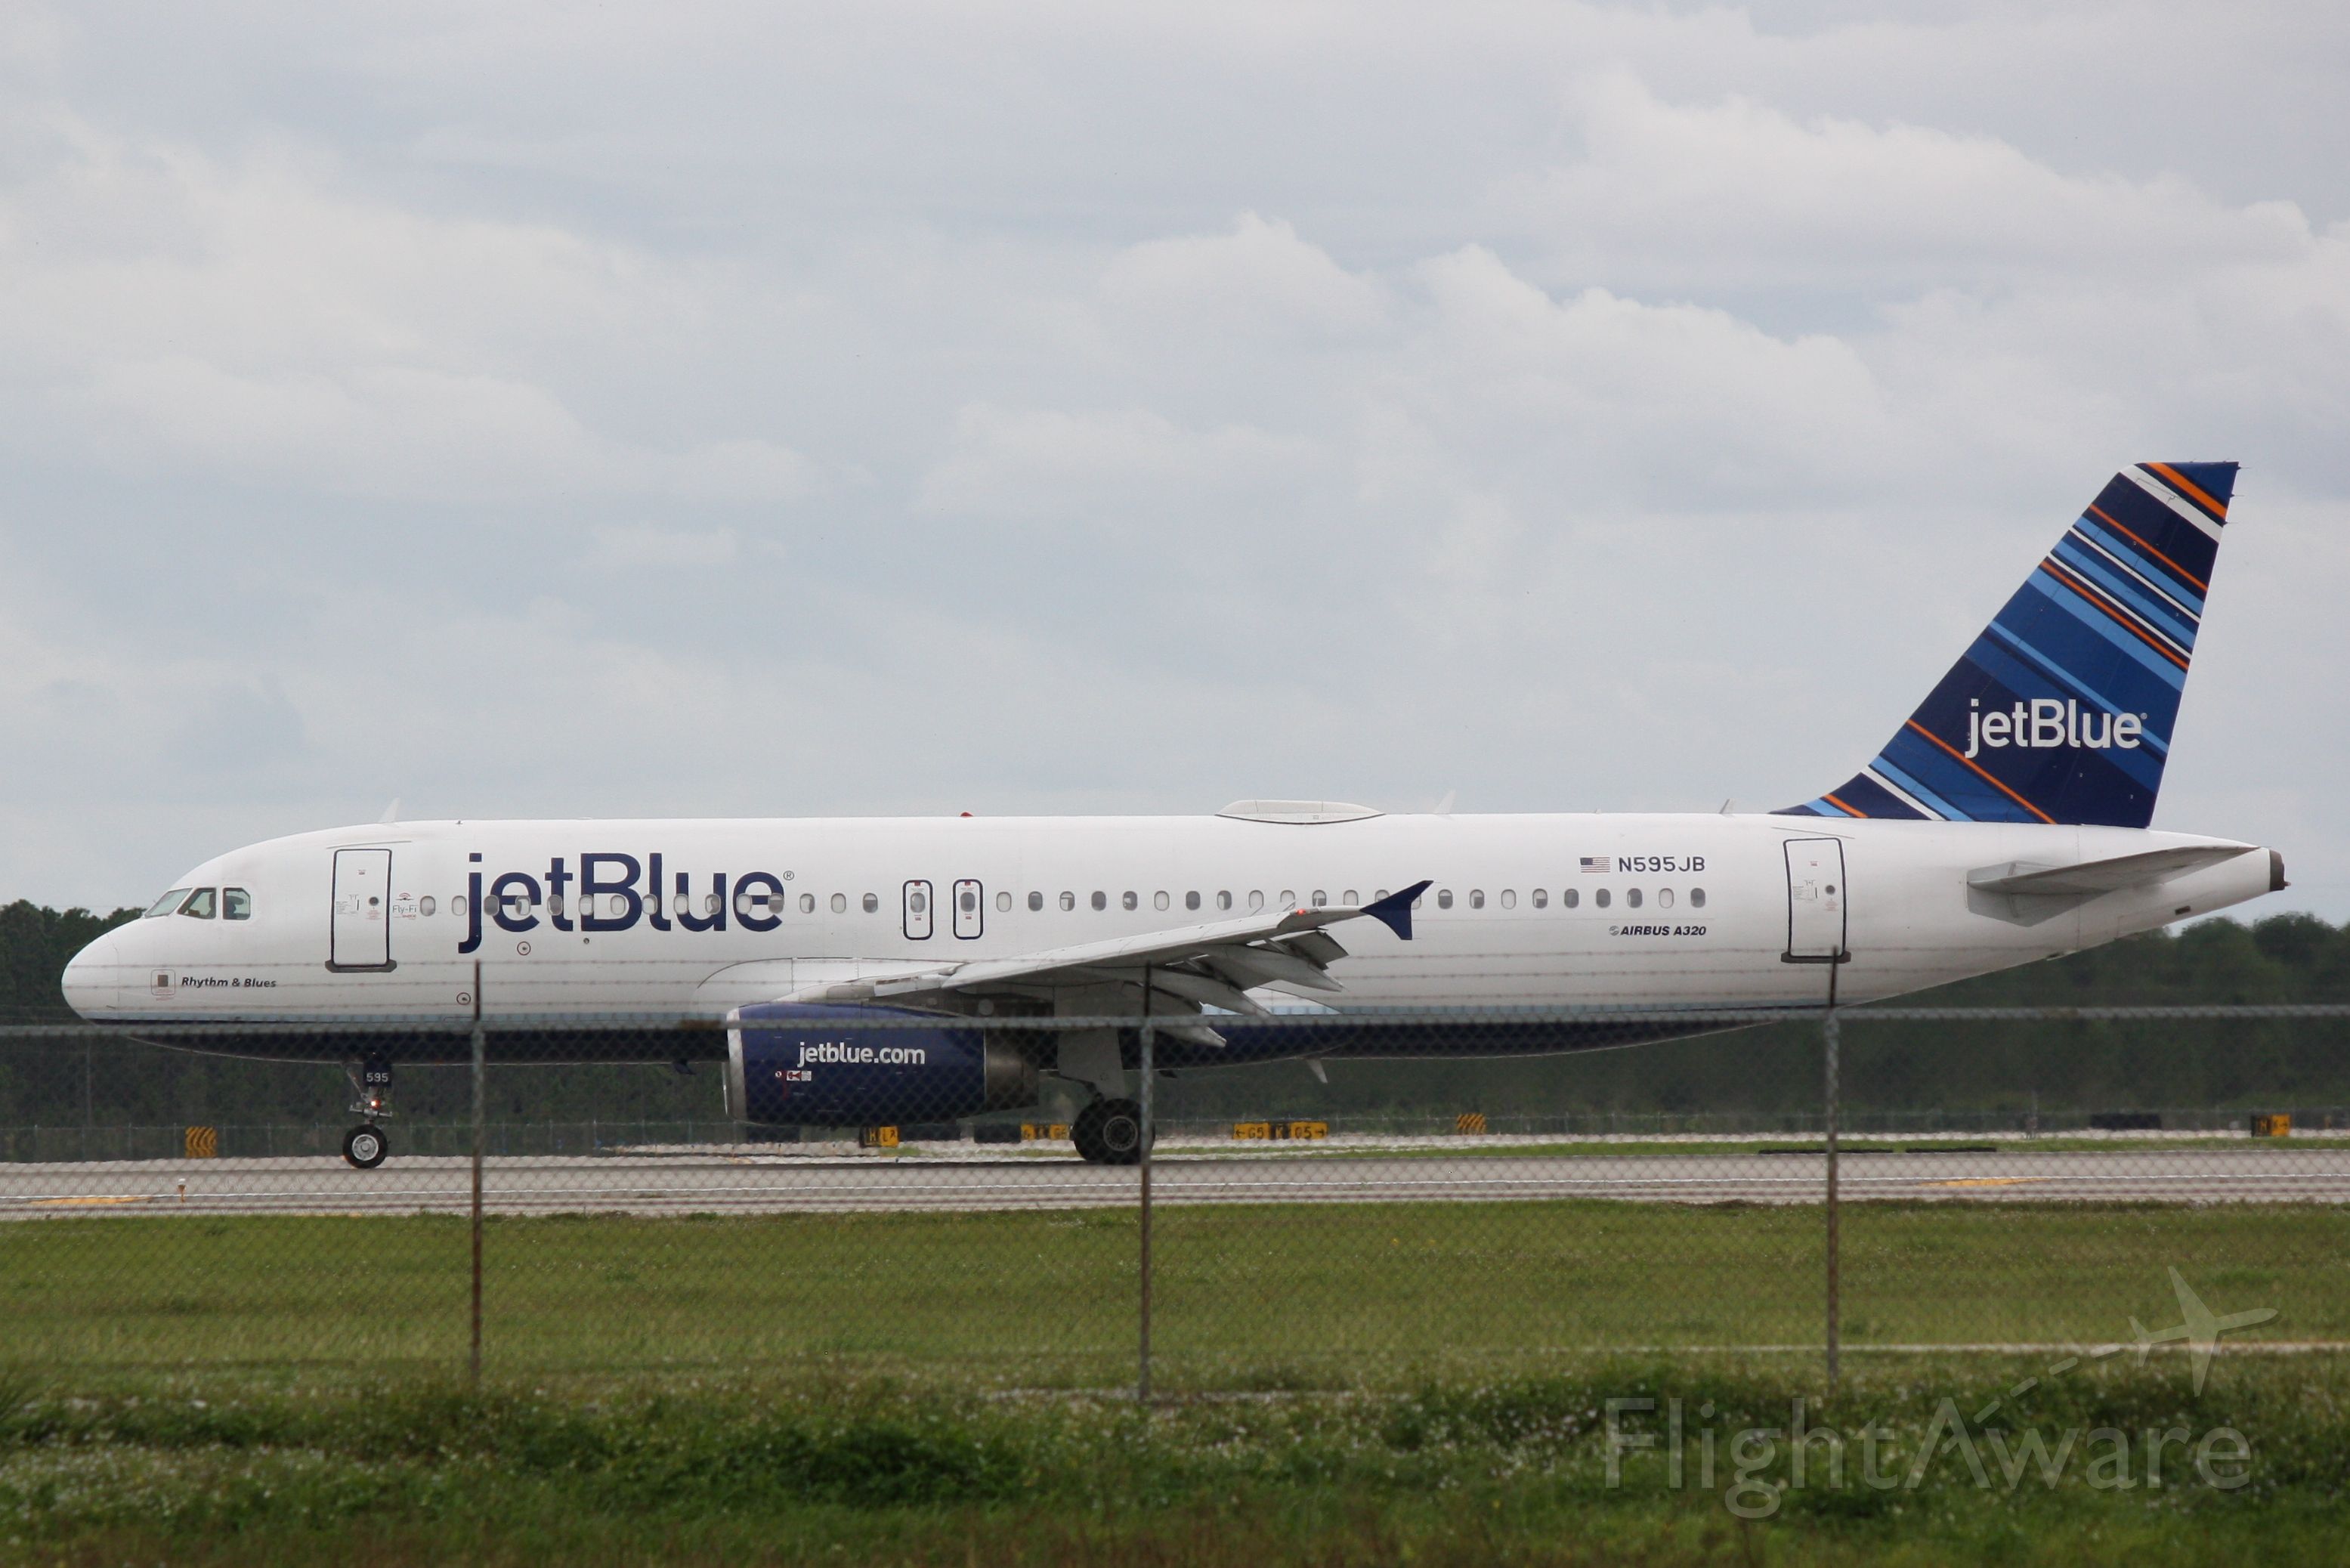 Airbus A320 (N595JB) - JetBlue Flight 1129 (N595JB) "Rhythm & Blues" arrives at Southwest Florida International Airport following flight from John F Kennedy International Airport